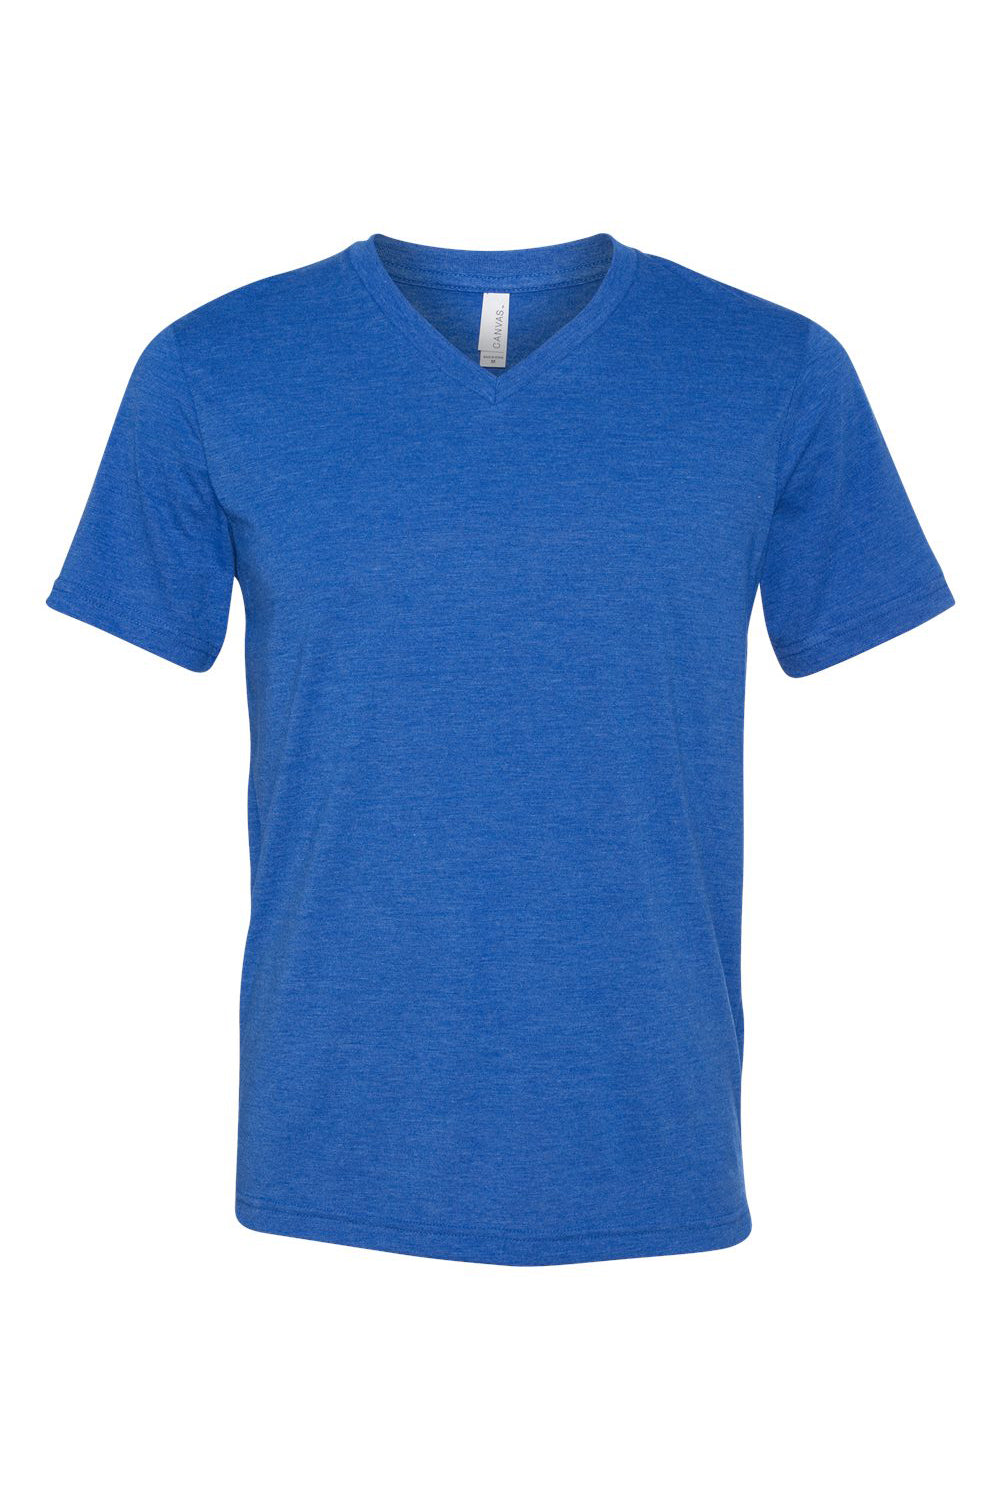 Bella + Canvas BC3415/3415C/3415 Mens Short Sleeve V-Neck T-Shirt True Royal Blue Flat Front